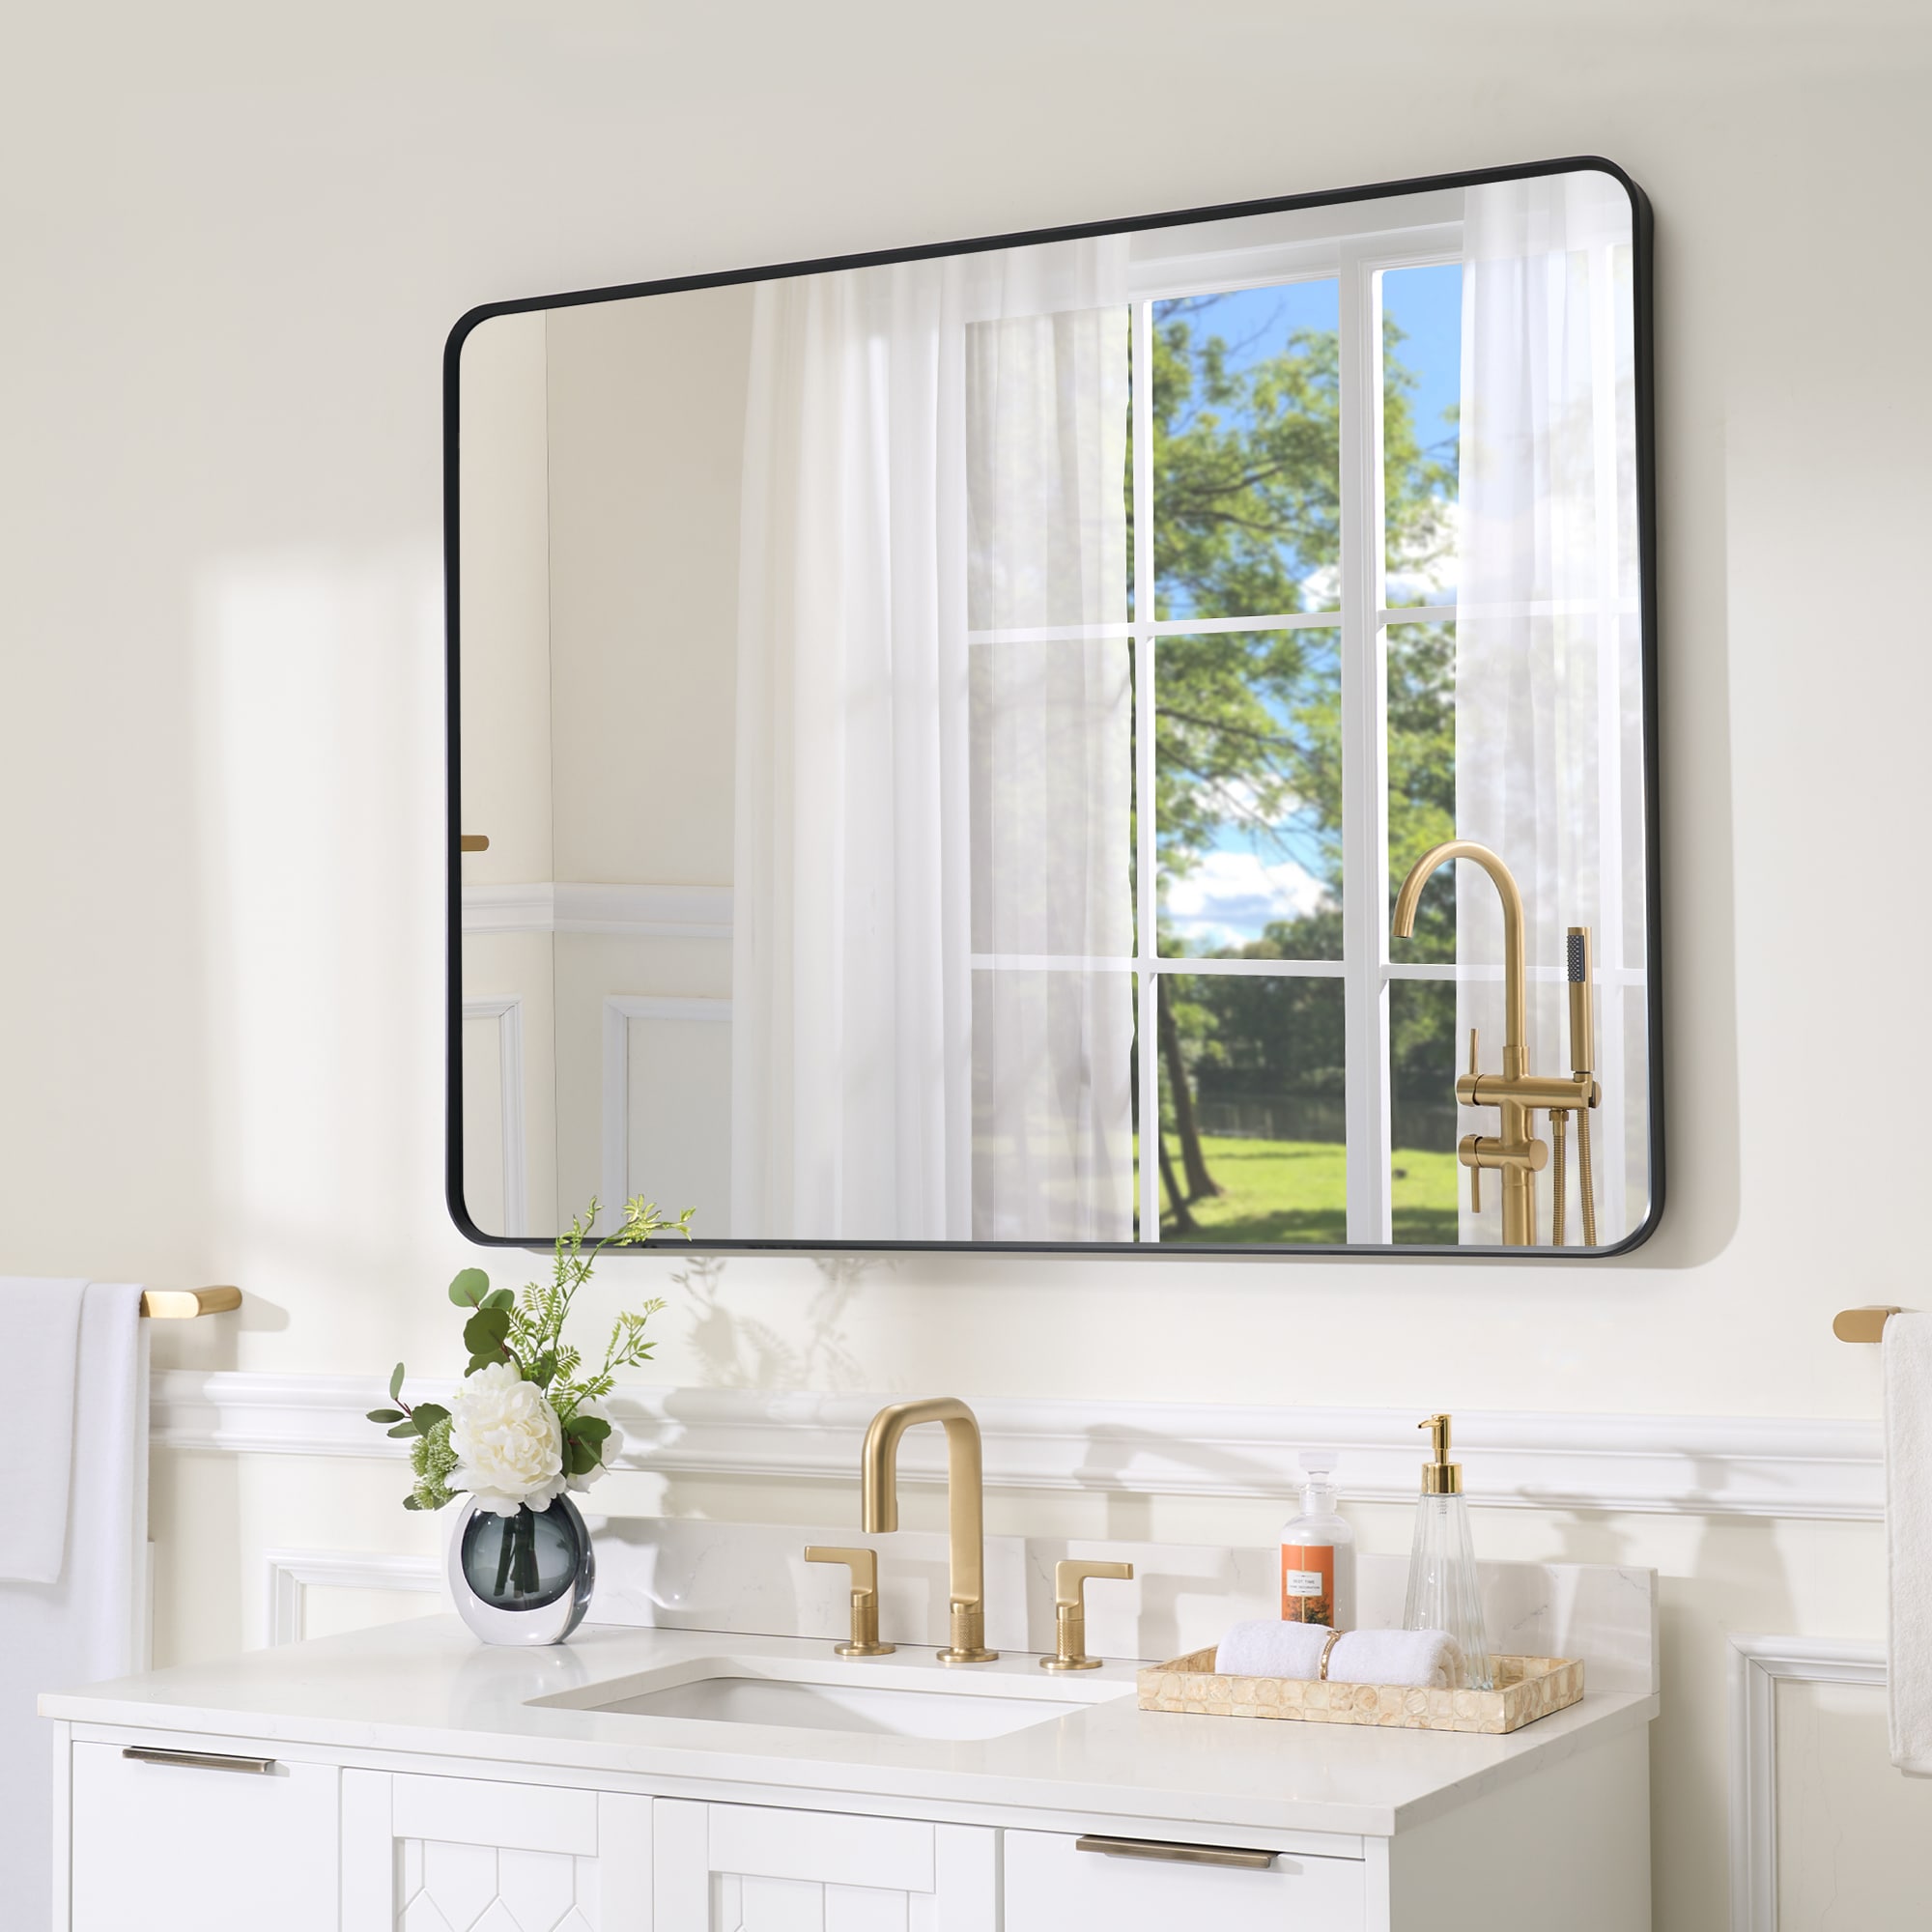 WELLFOR F1 Bathroom Mirror 48-in x 36-in Black Framed Bathroom